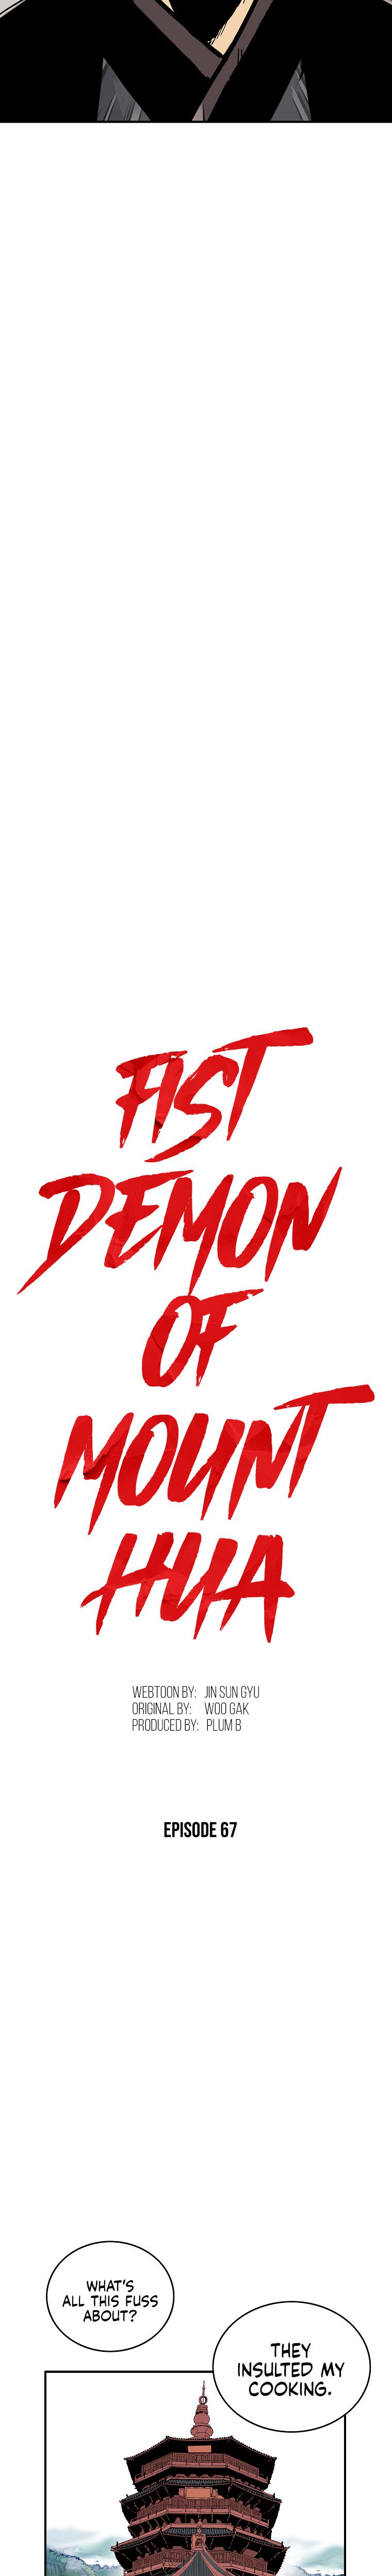 fist-demon-of-mount-hua-chap-67-1